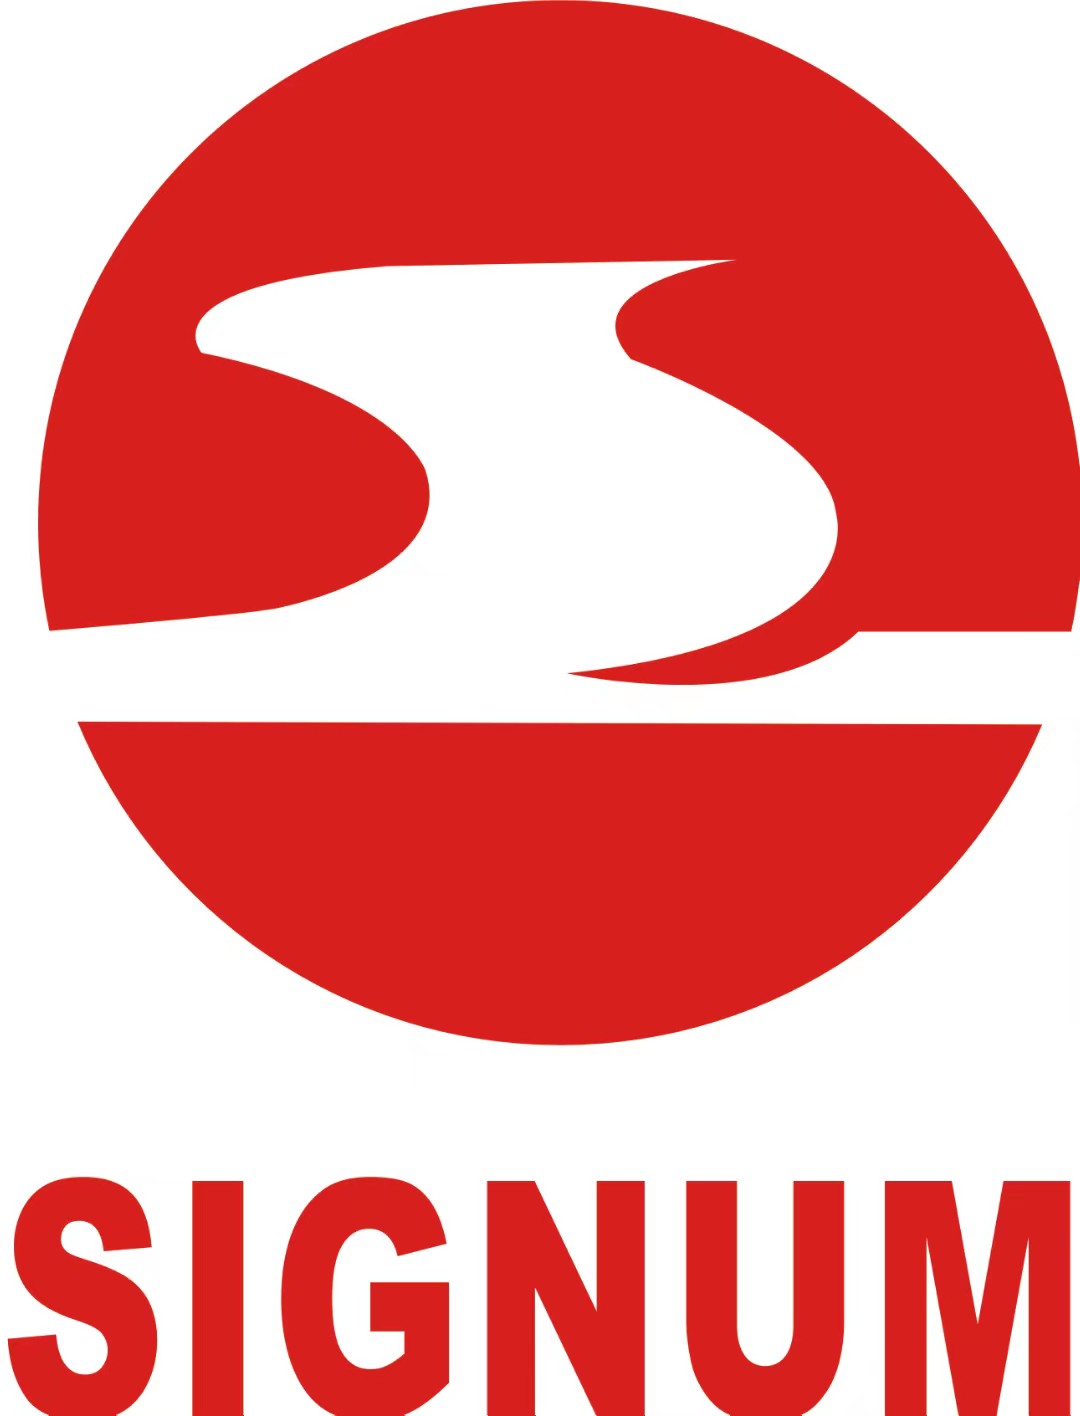 Kunshan Signum Machinery Technology Co.,Ltd